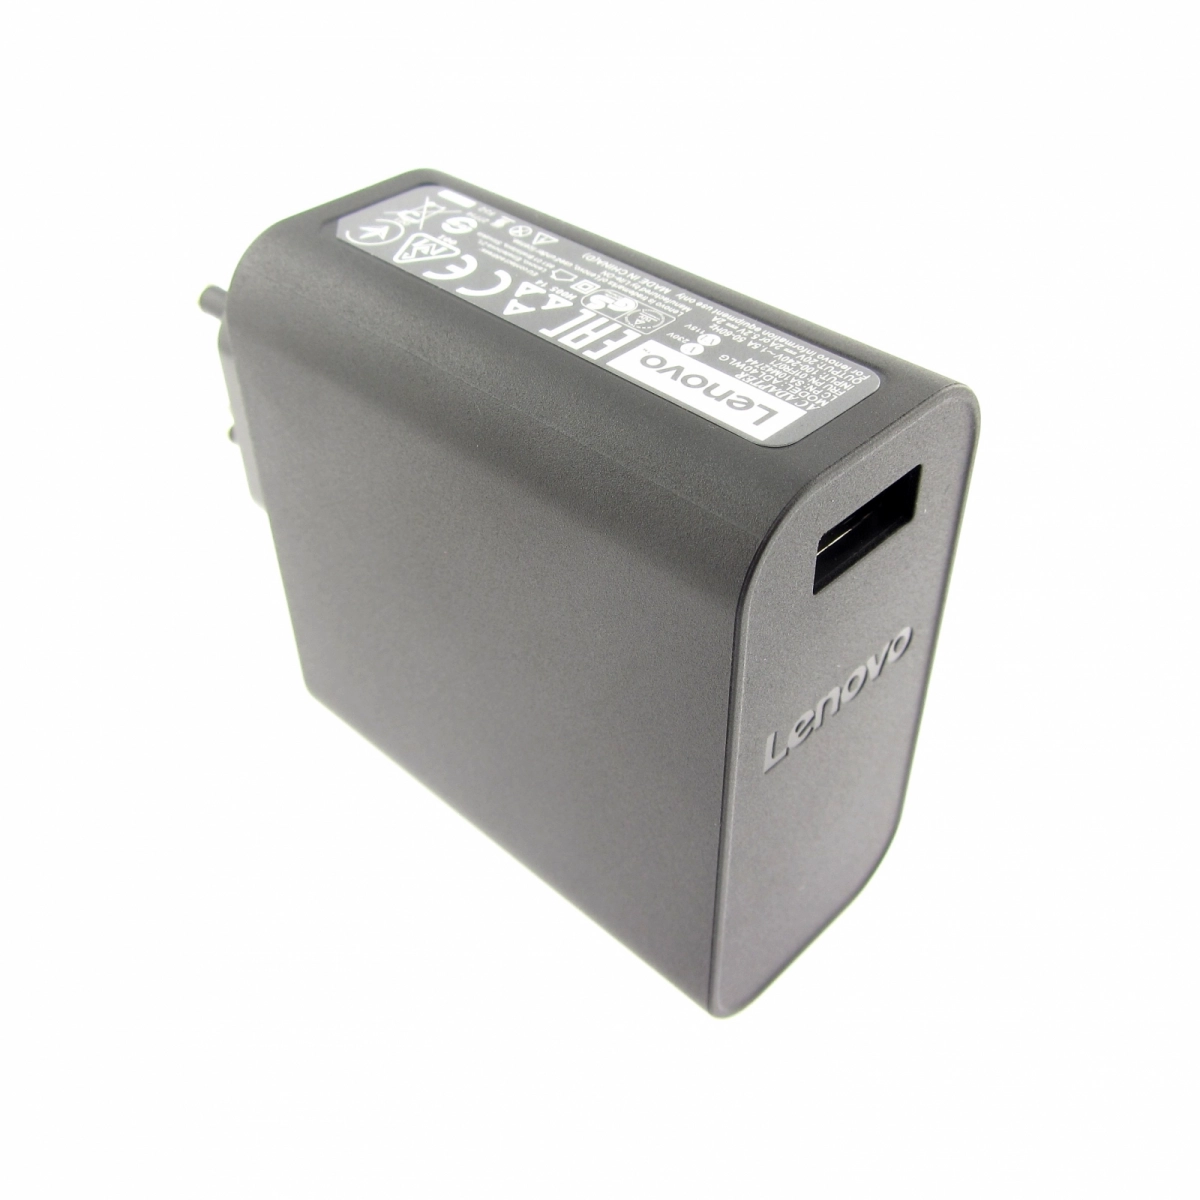 Original Netzteil für LENOVO ADL40WDC 36200567, 20V, 2A, Stecker USB, ohne USB-Kabel